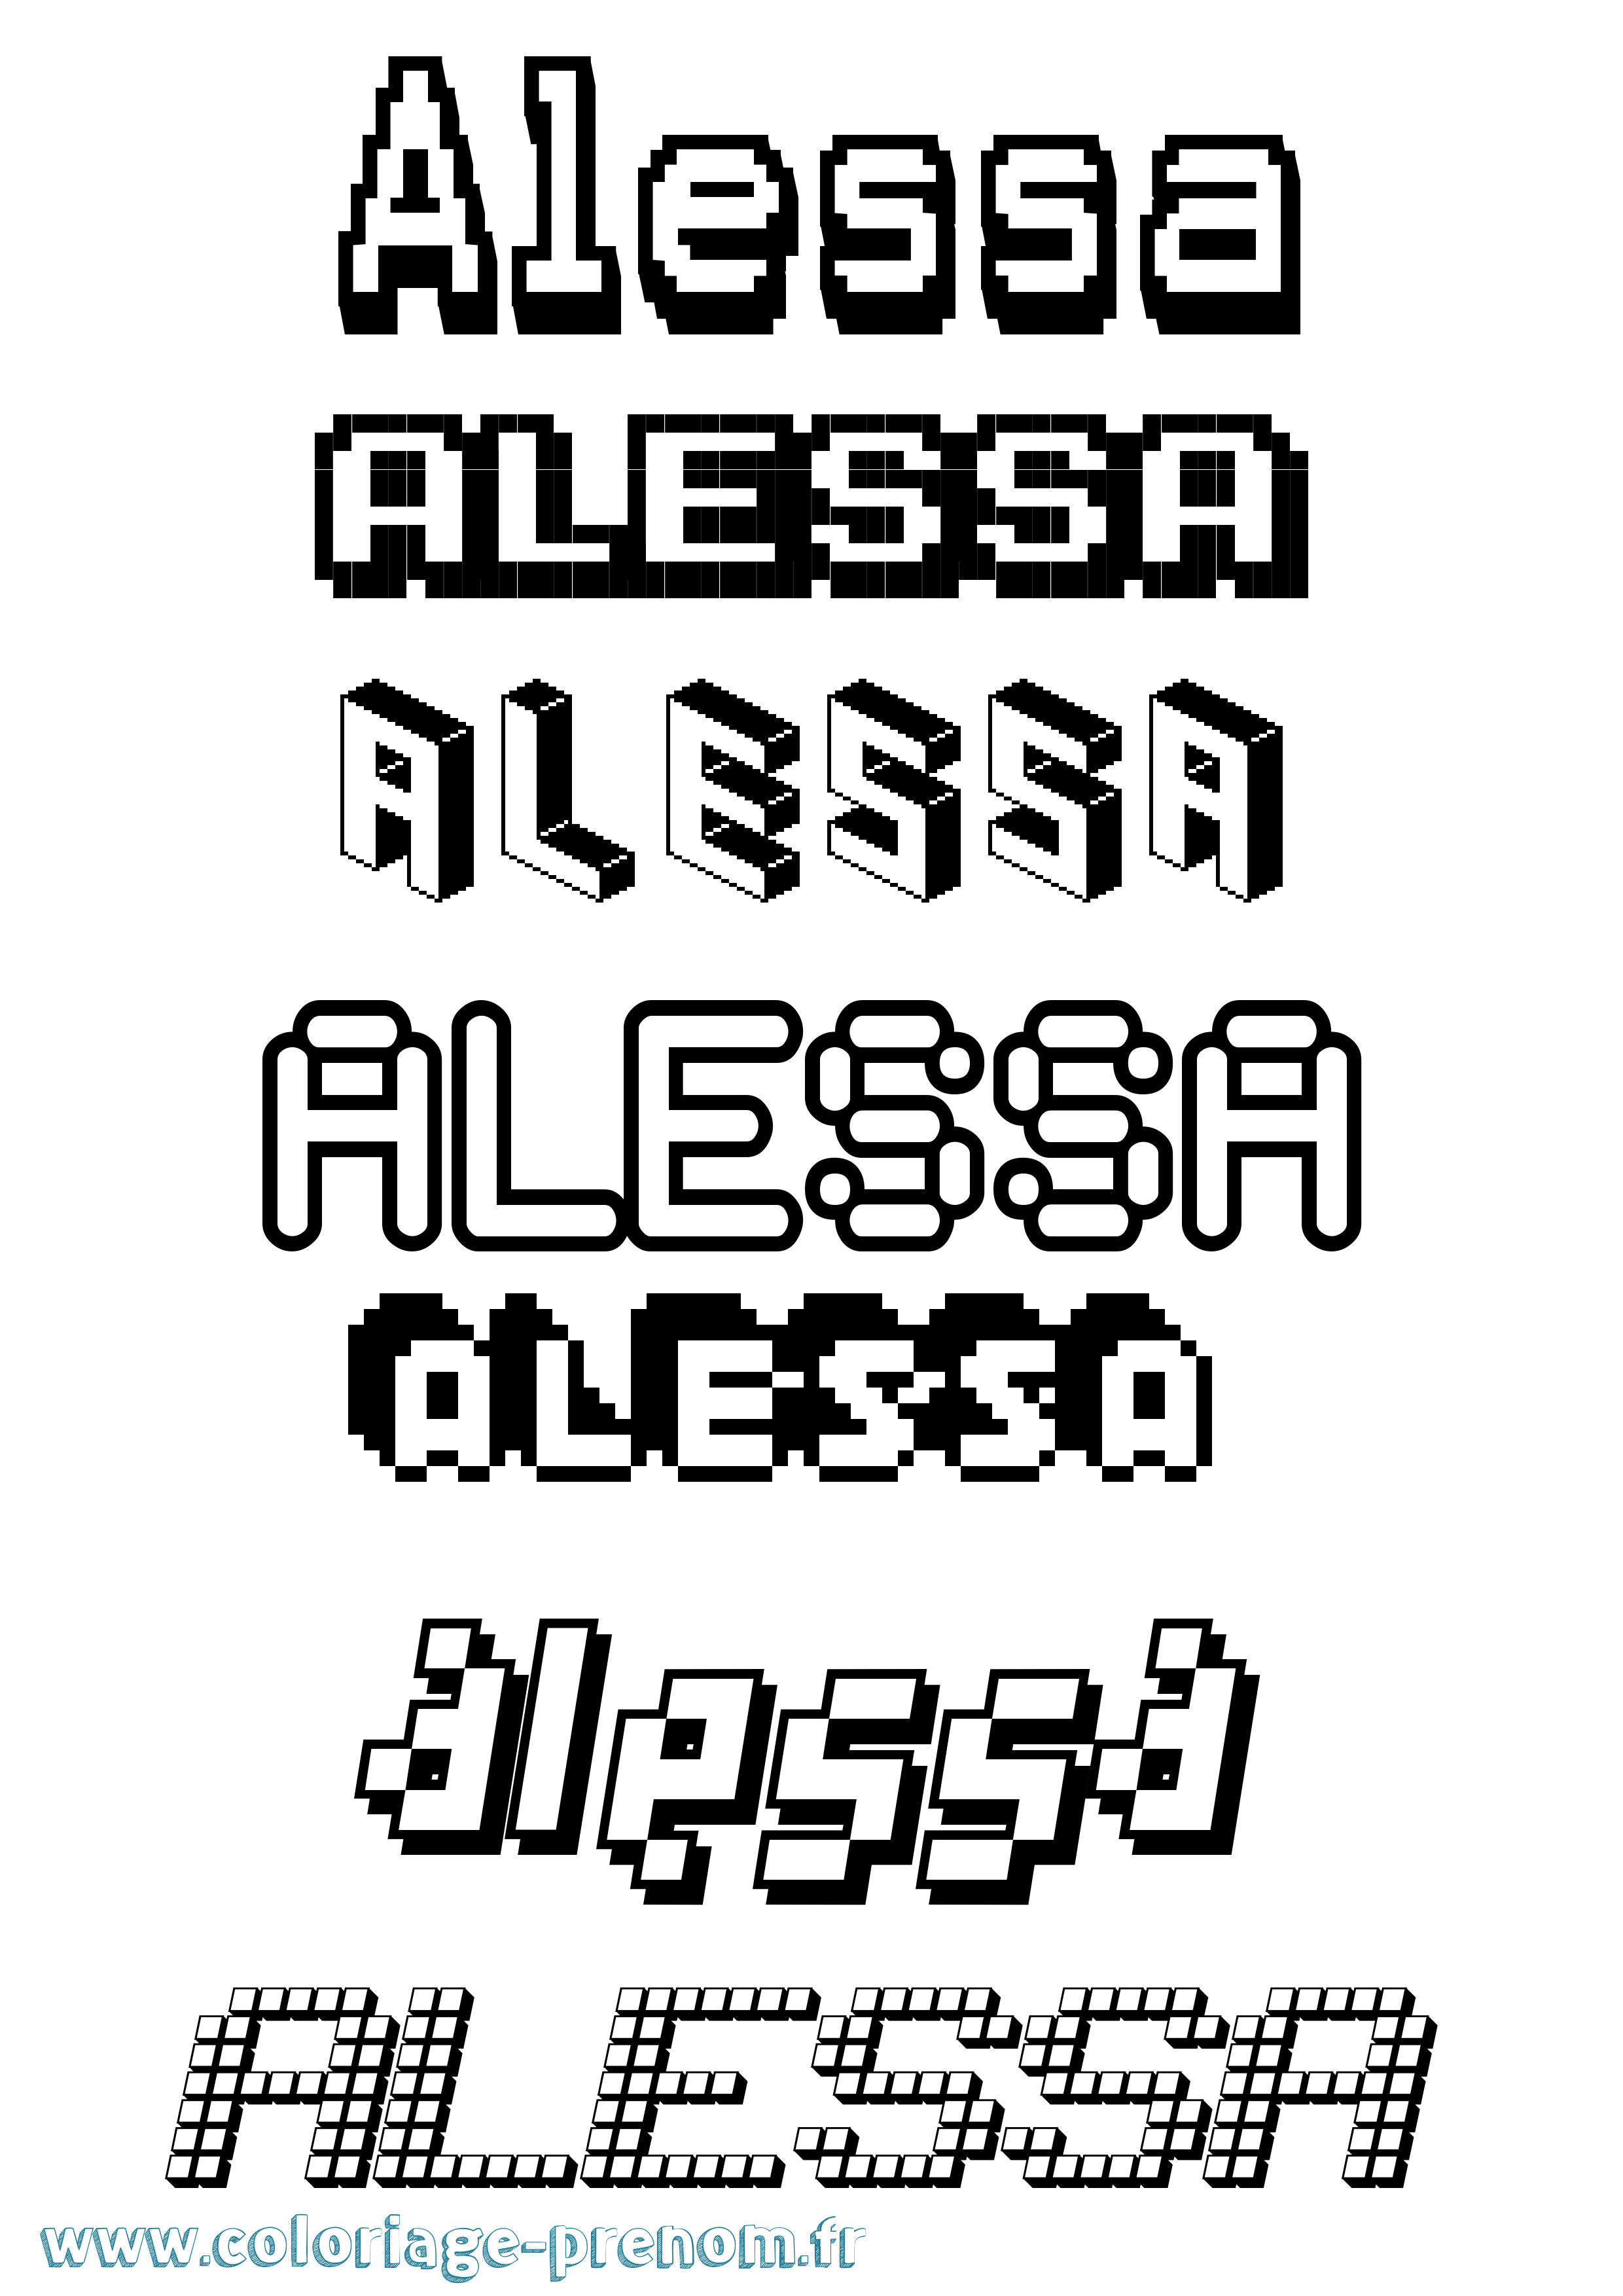 Coloriage prénom Alessa Pixel